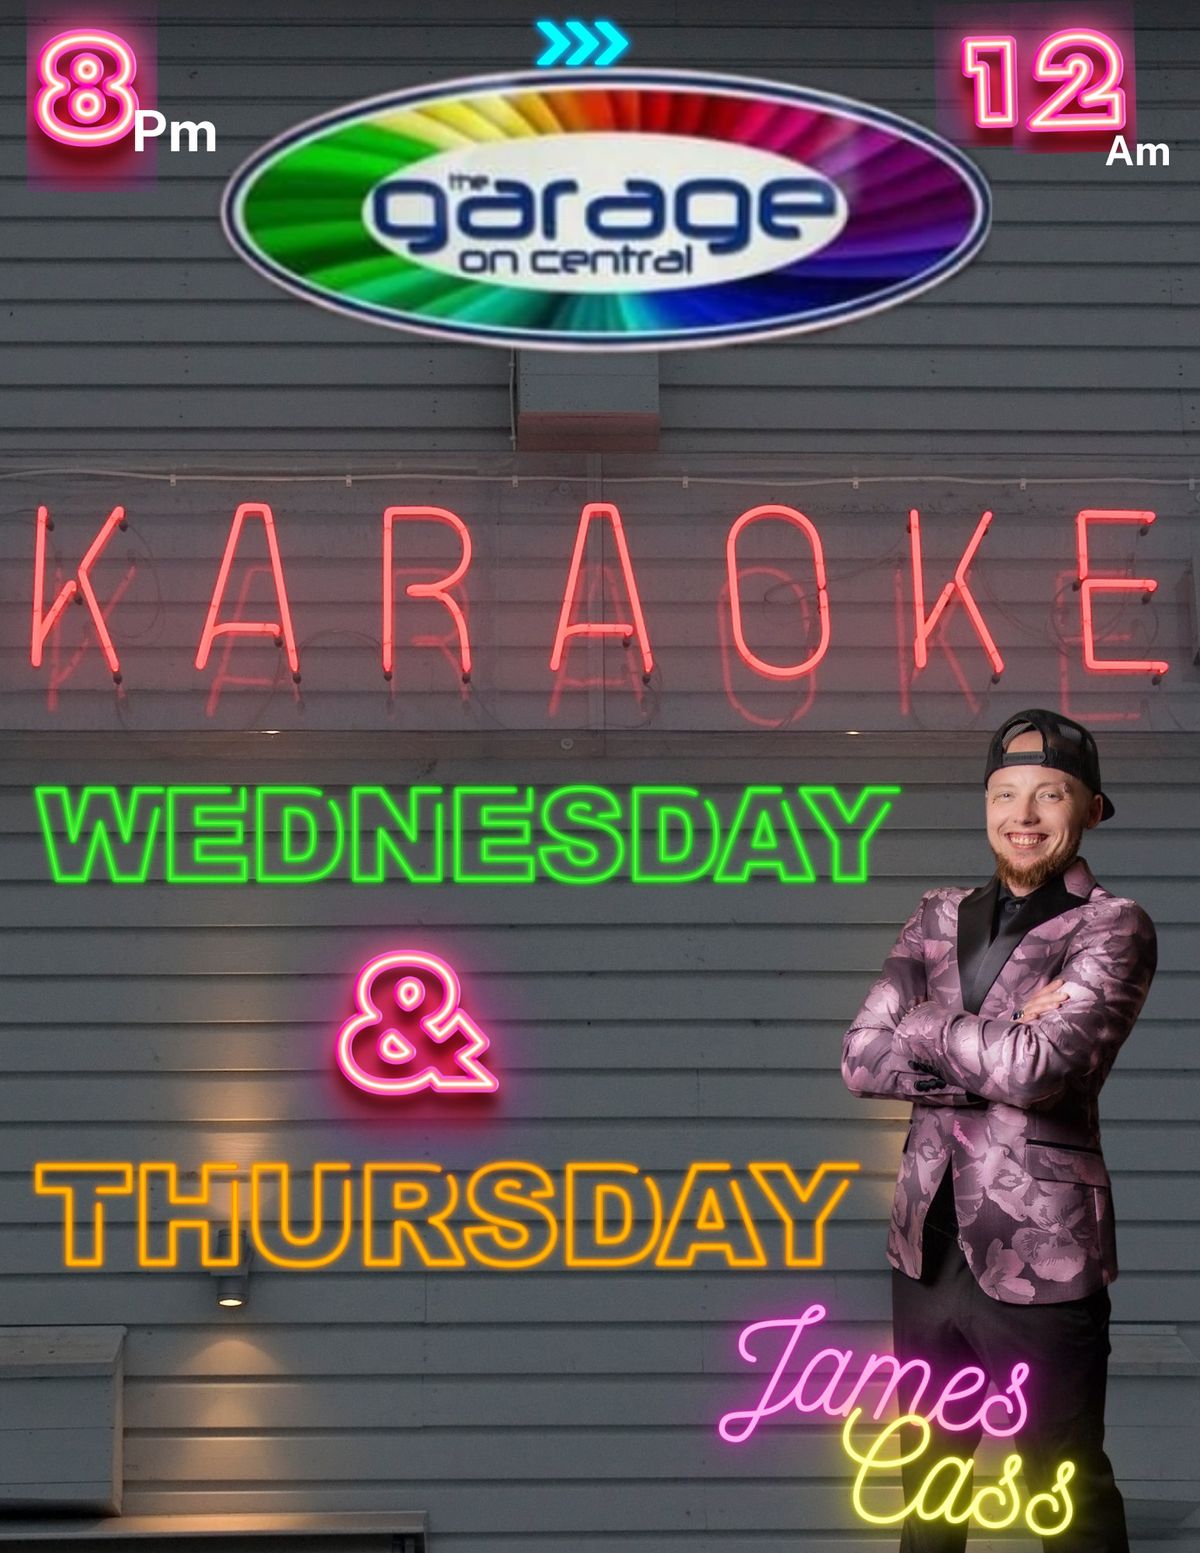 Karaoke nights @ The Garage on Central 